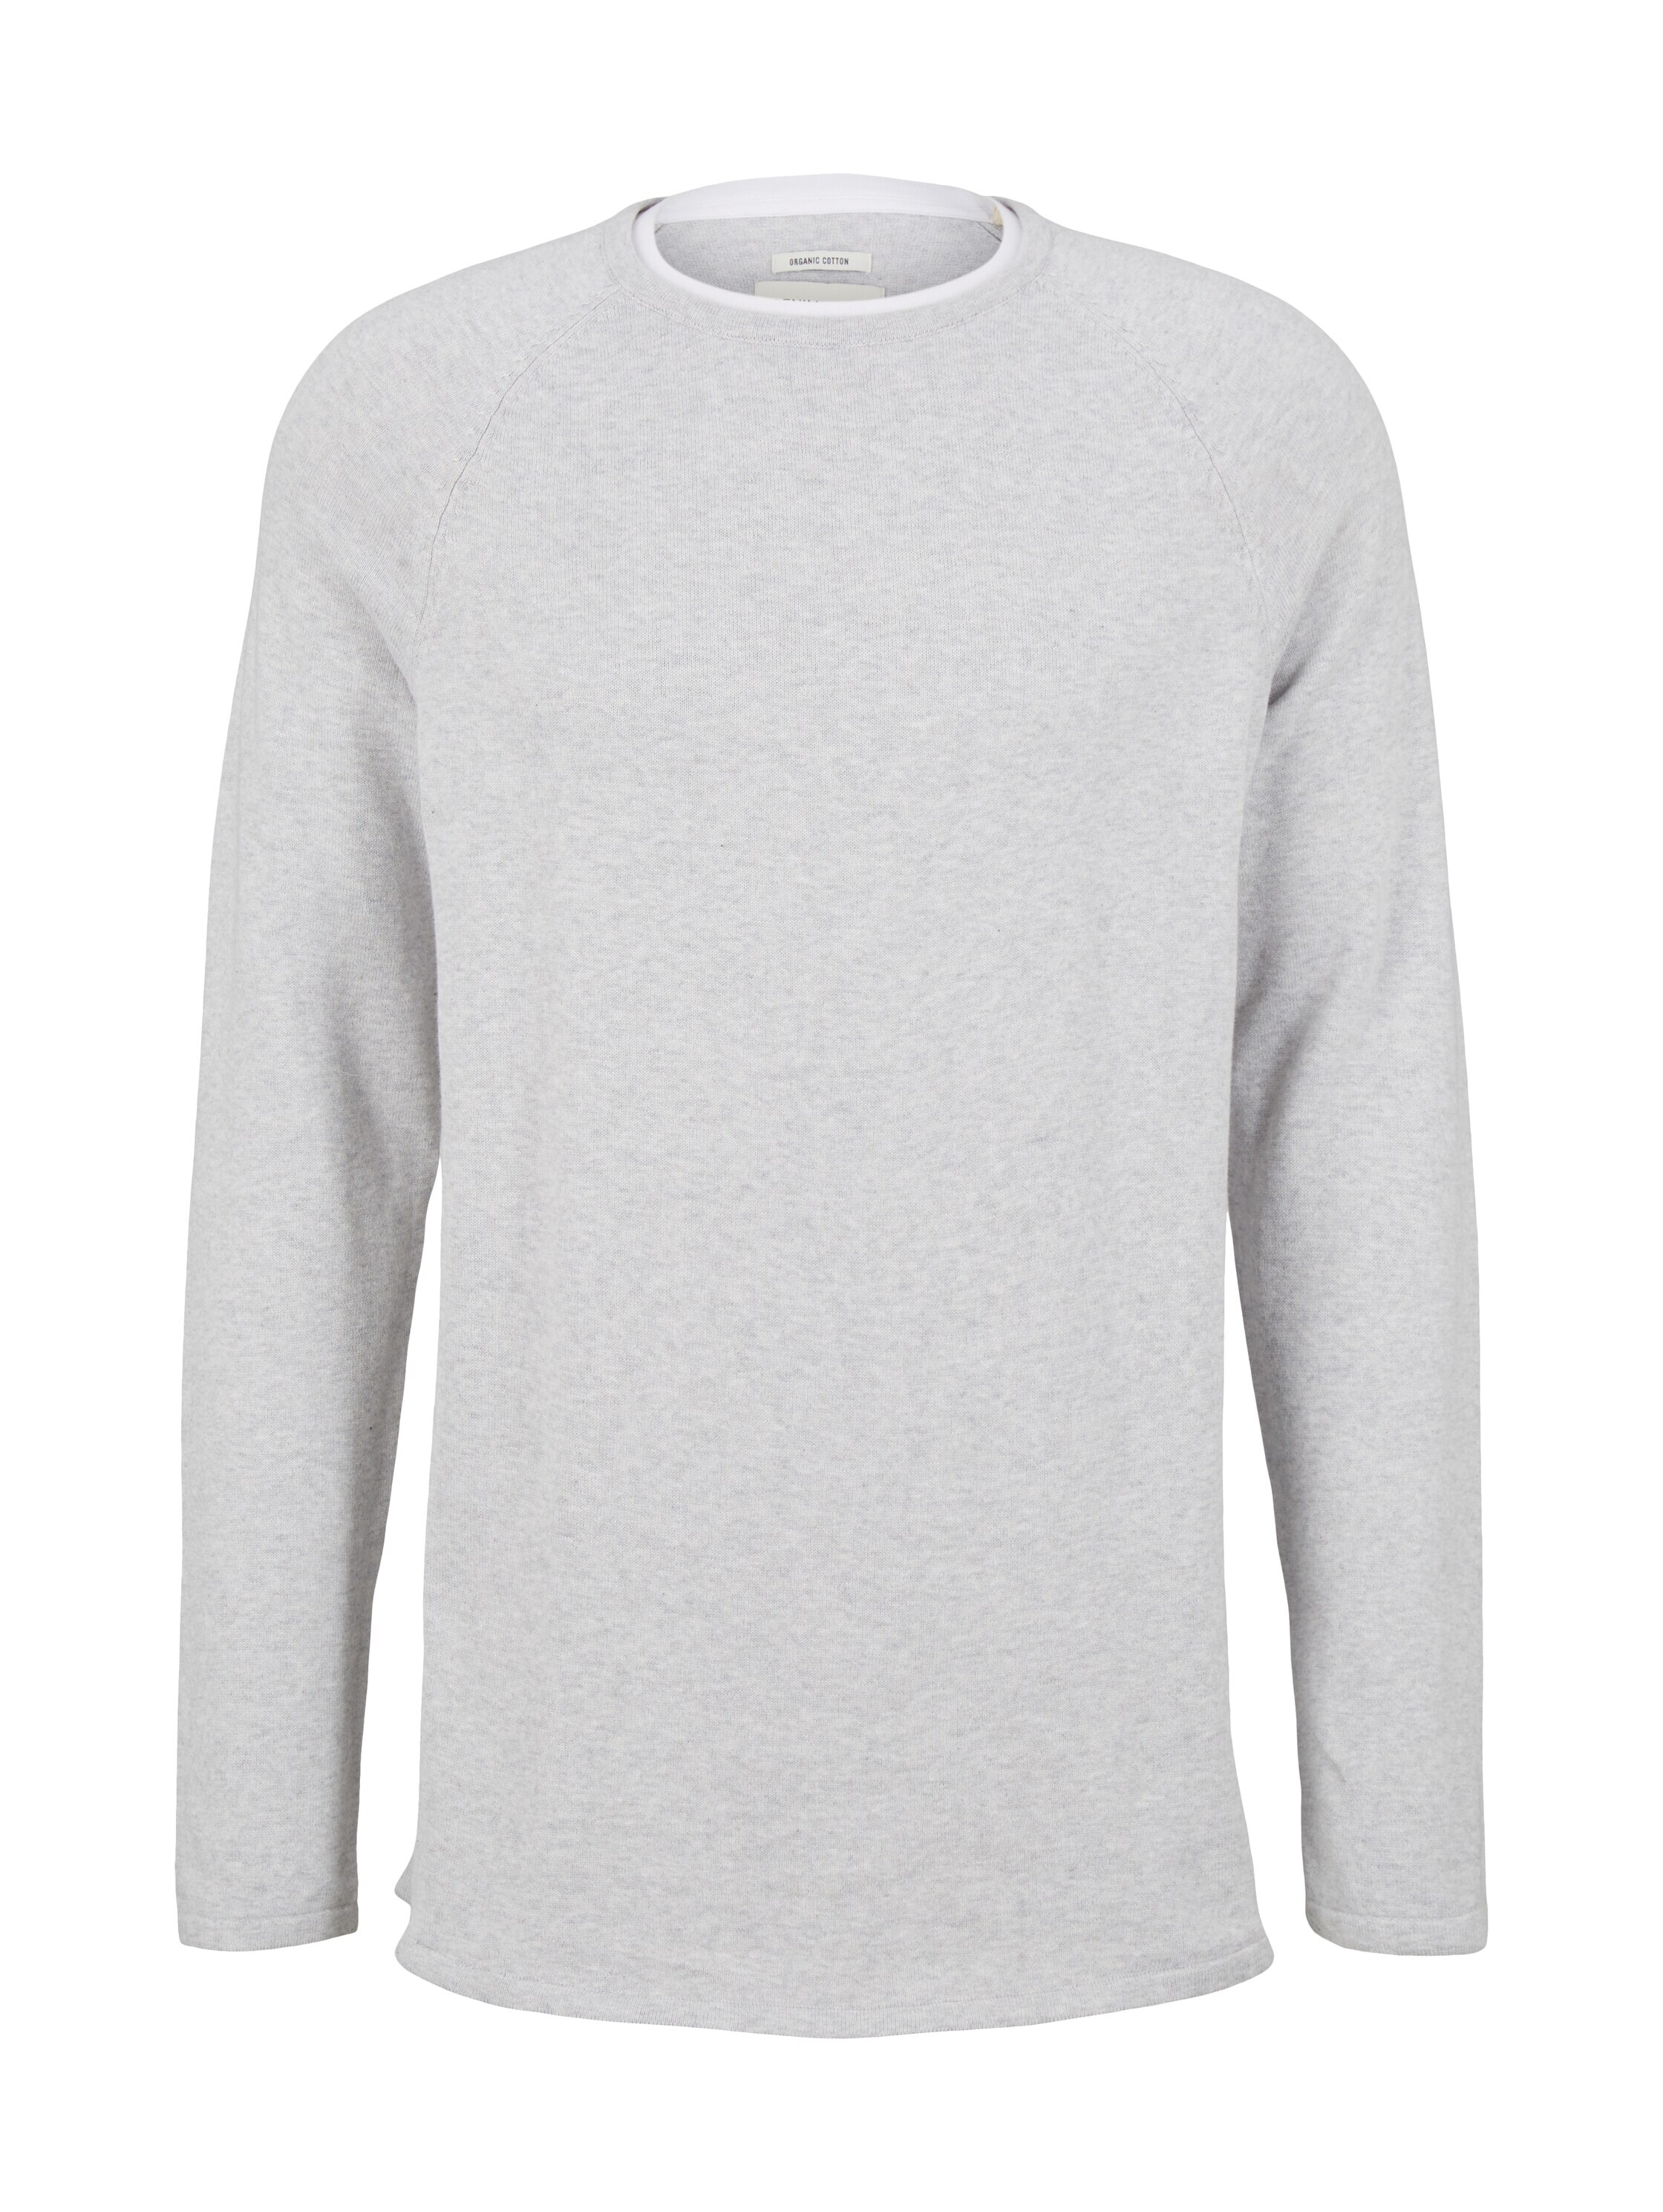 Пуловер Tom Tailor, серый пуловер tom tailor размер m серый